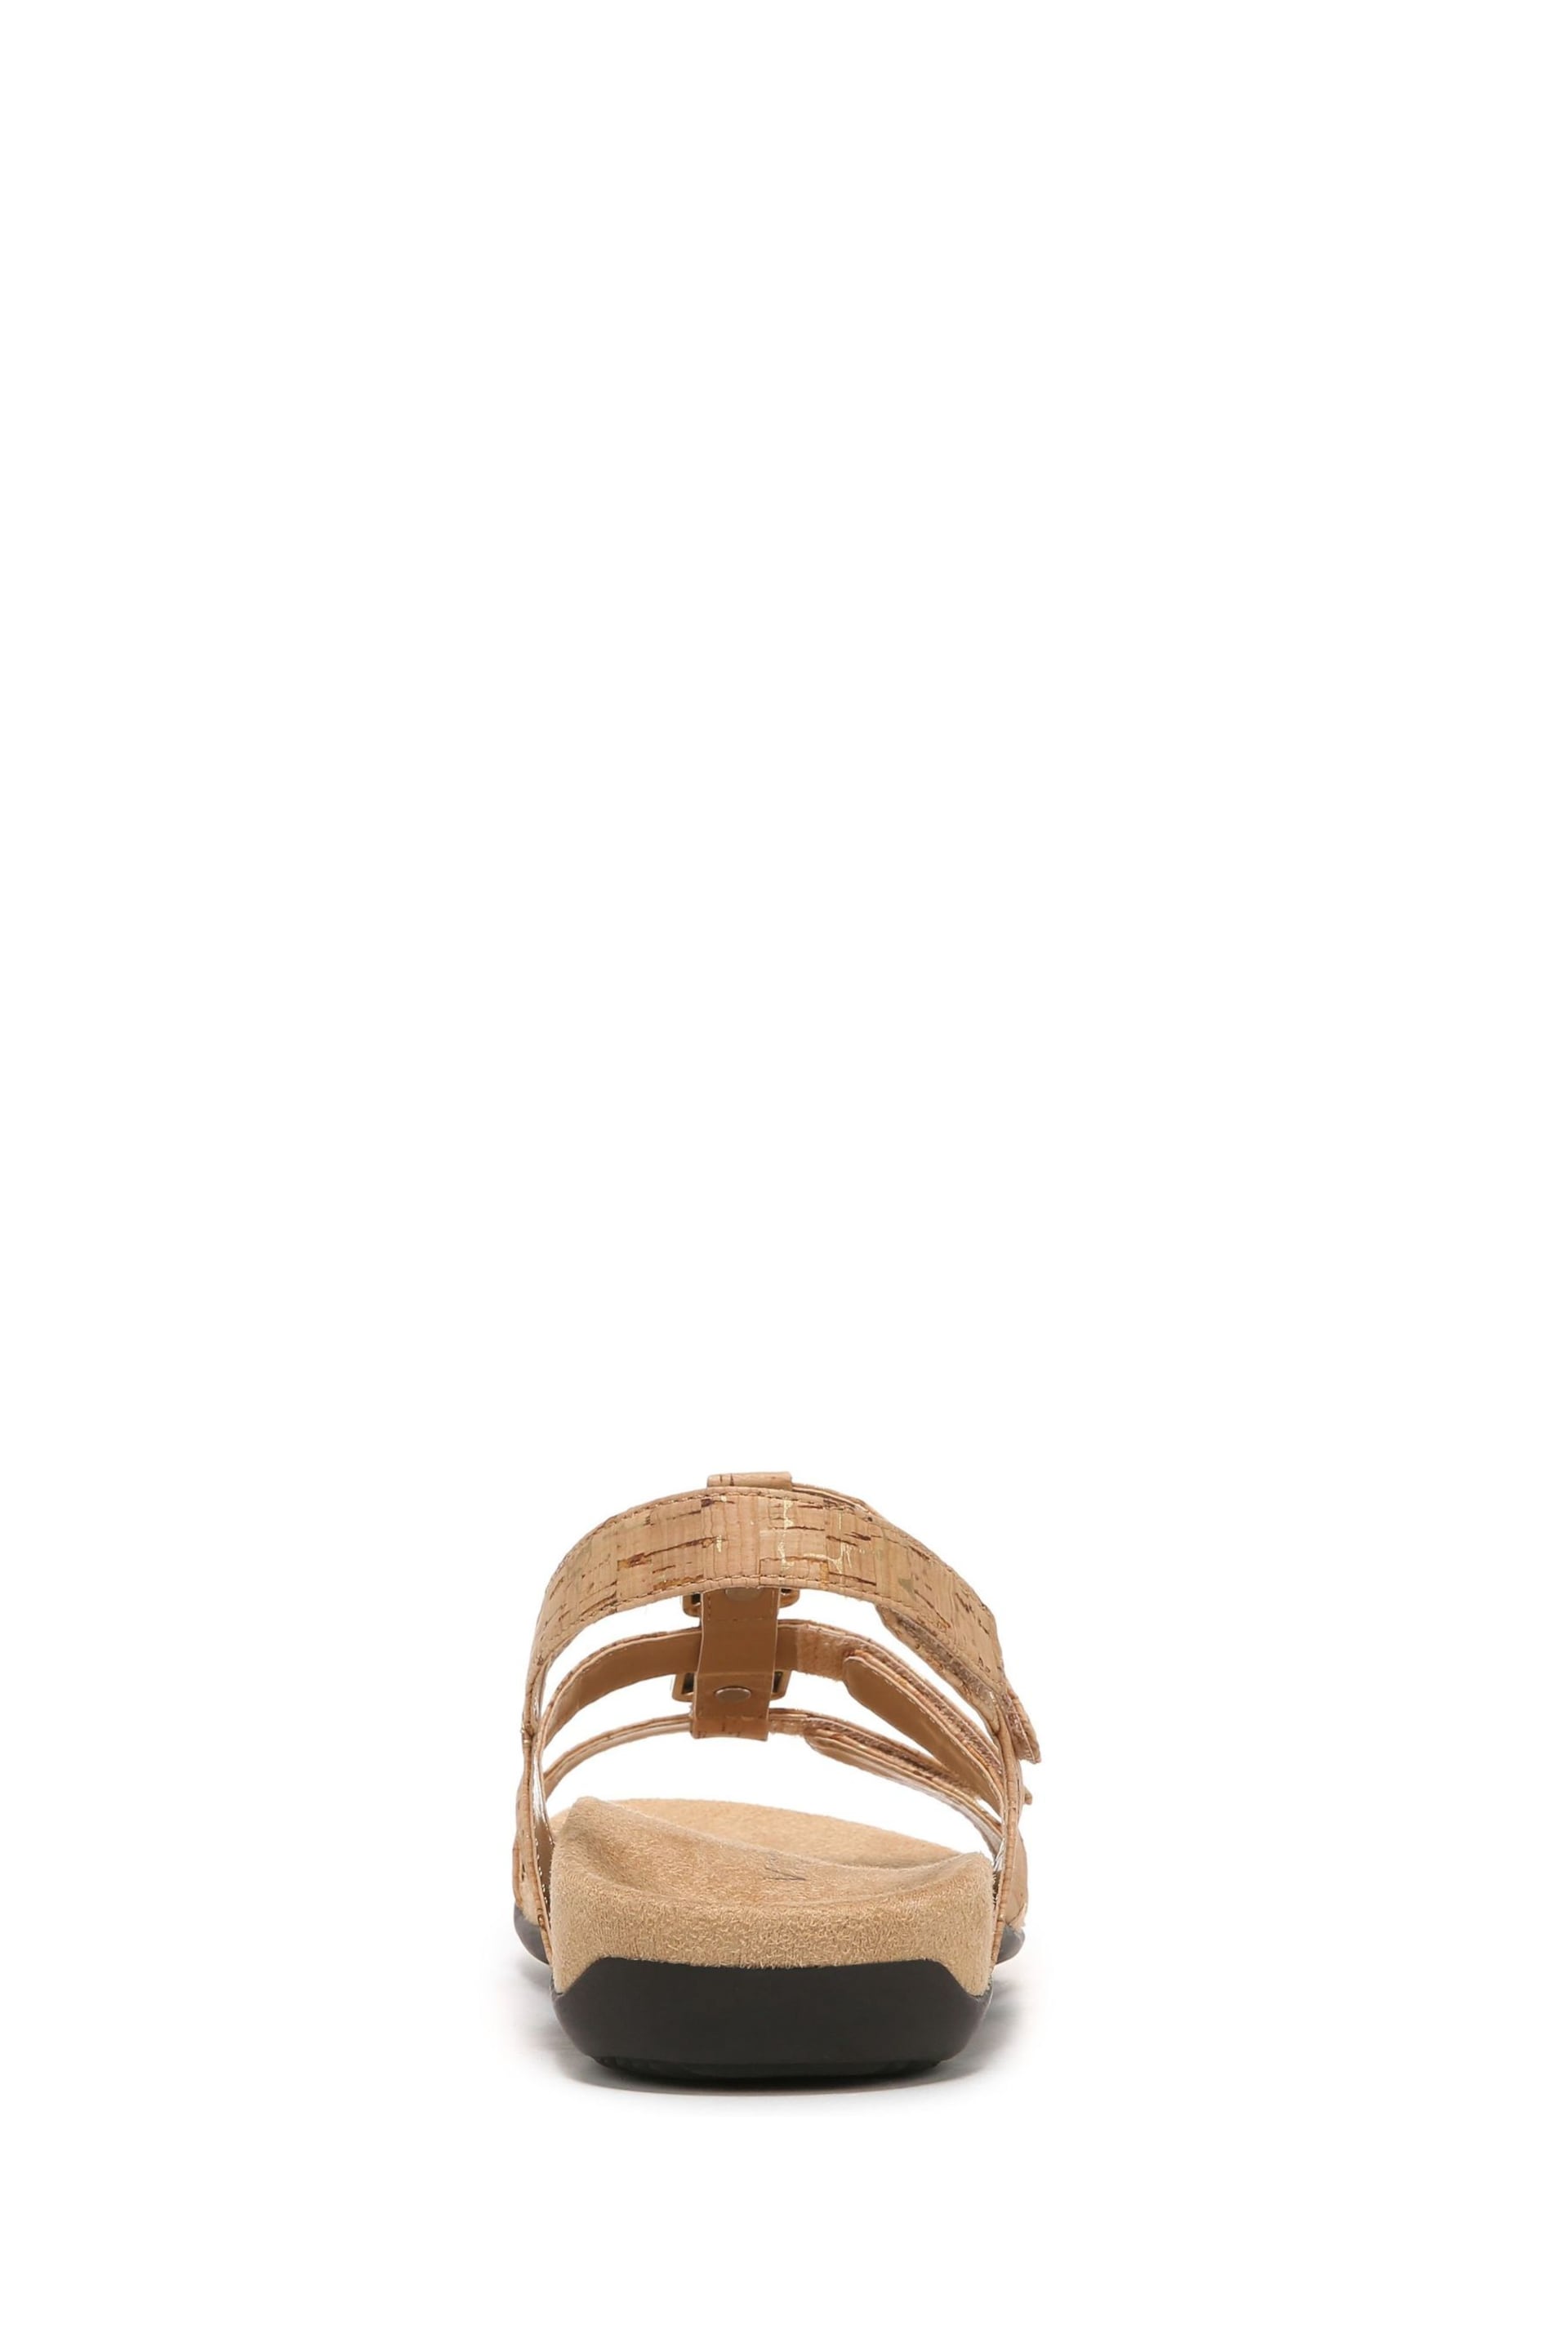 Vionic Amber Crocodile Sandals - Image 5 of 7